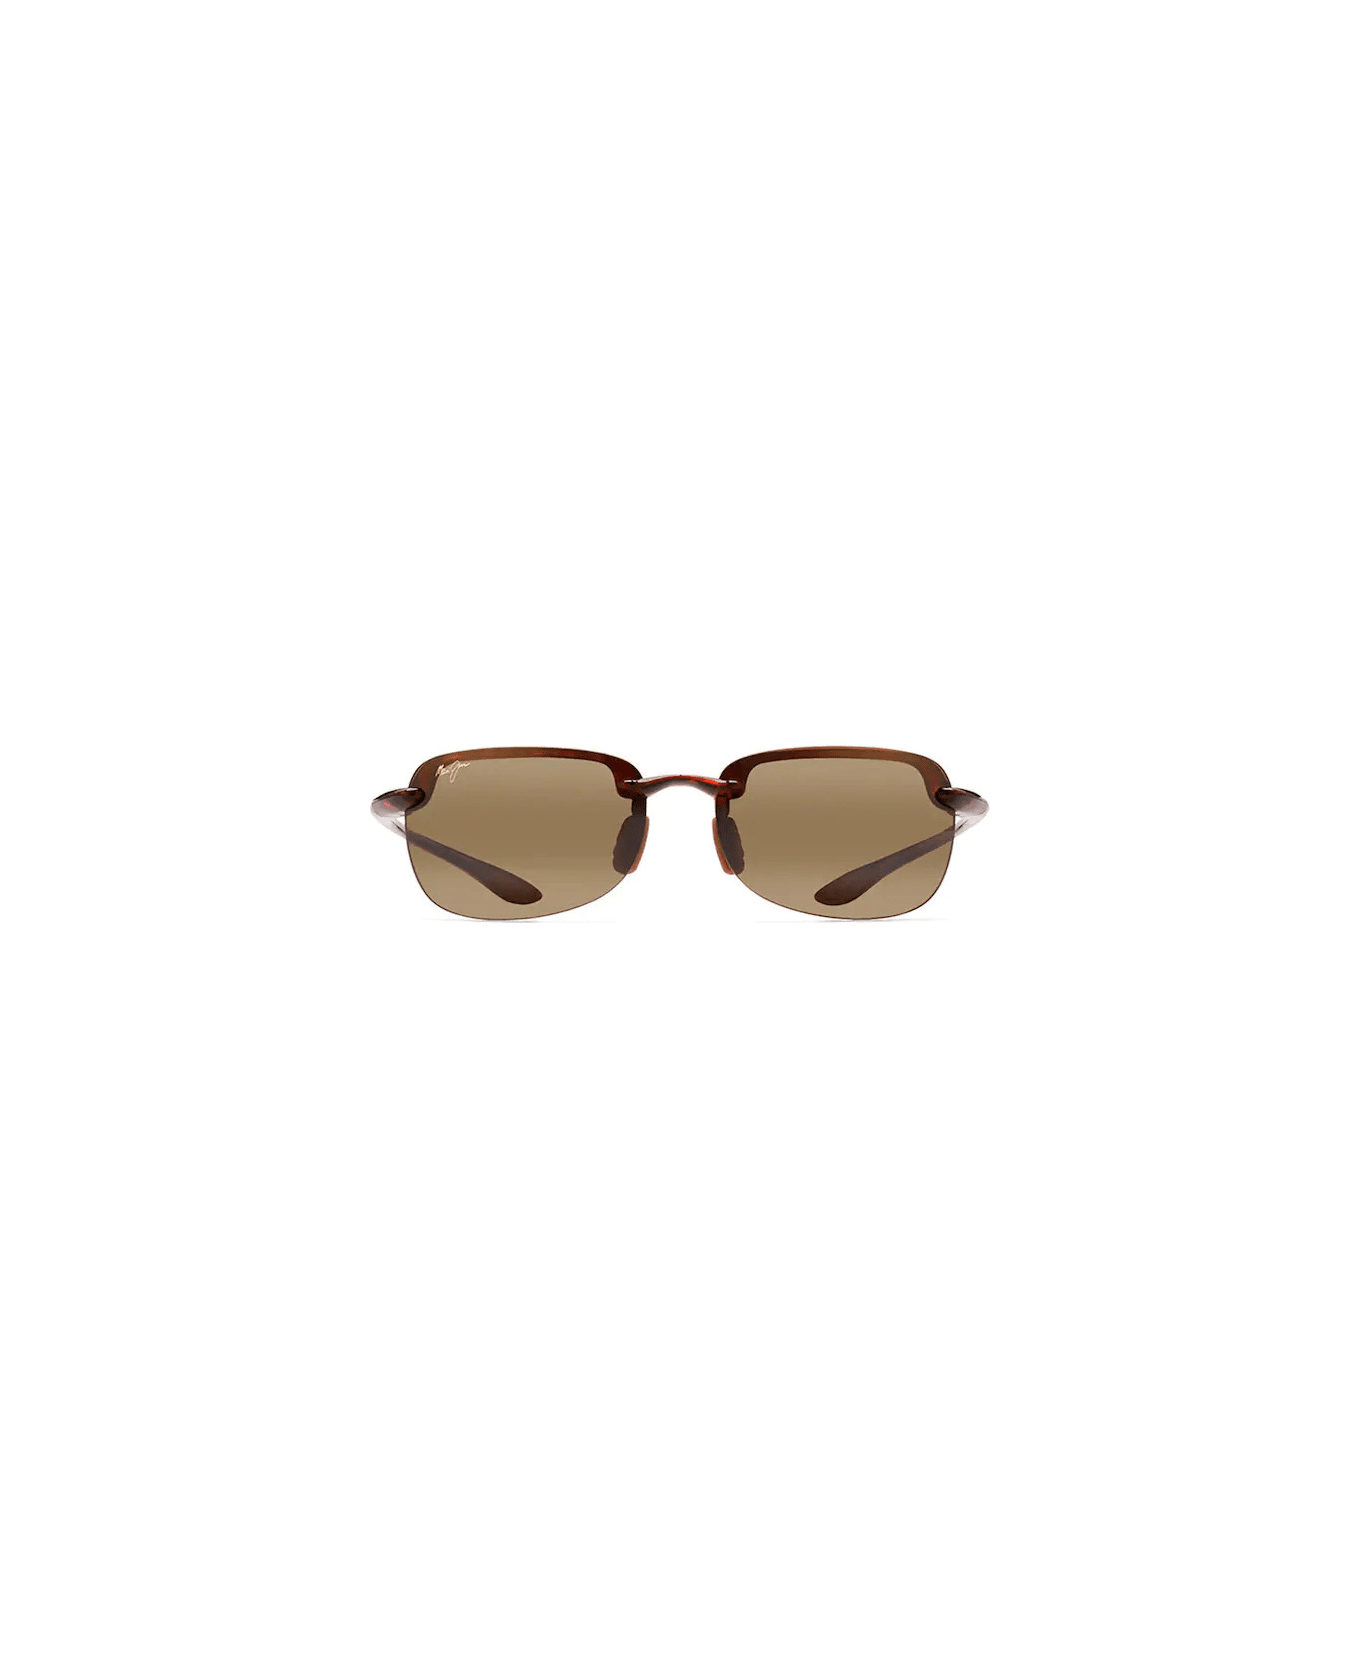 Maui Jim MJ412-10 Sunglasses - Marrone lenti bronzo サングラス